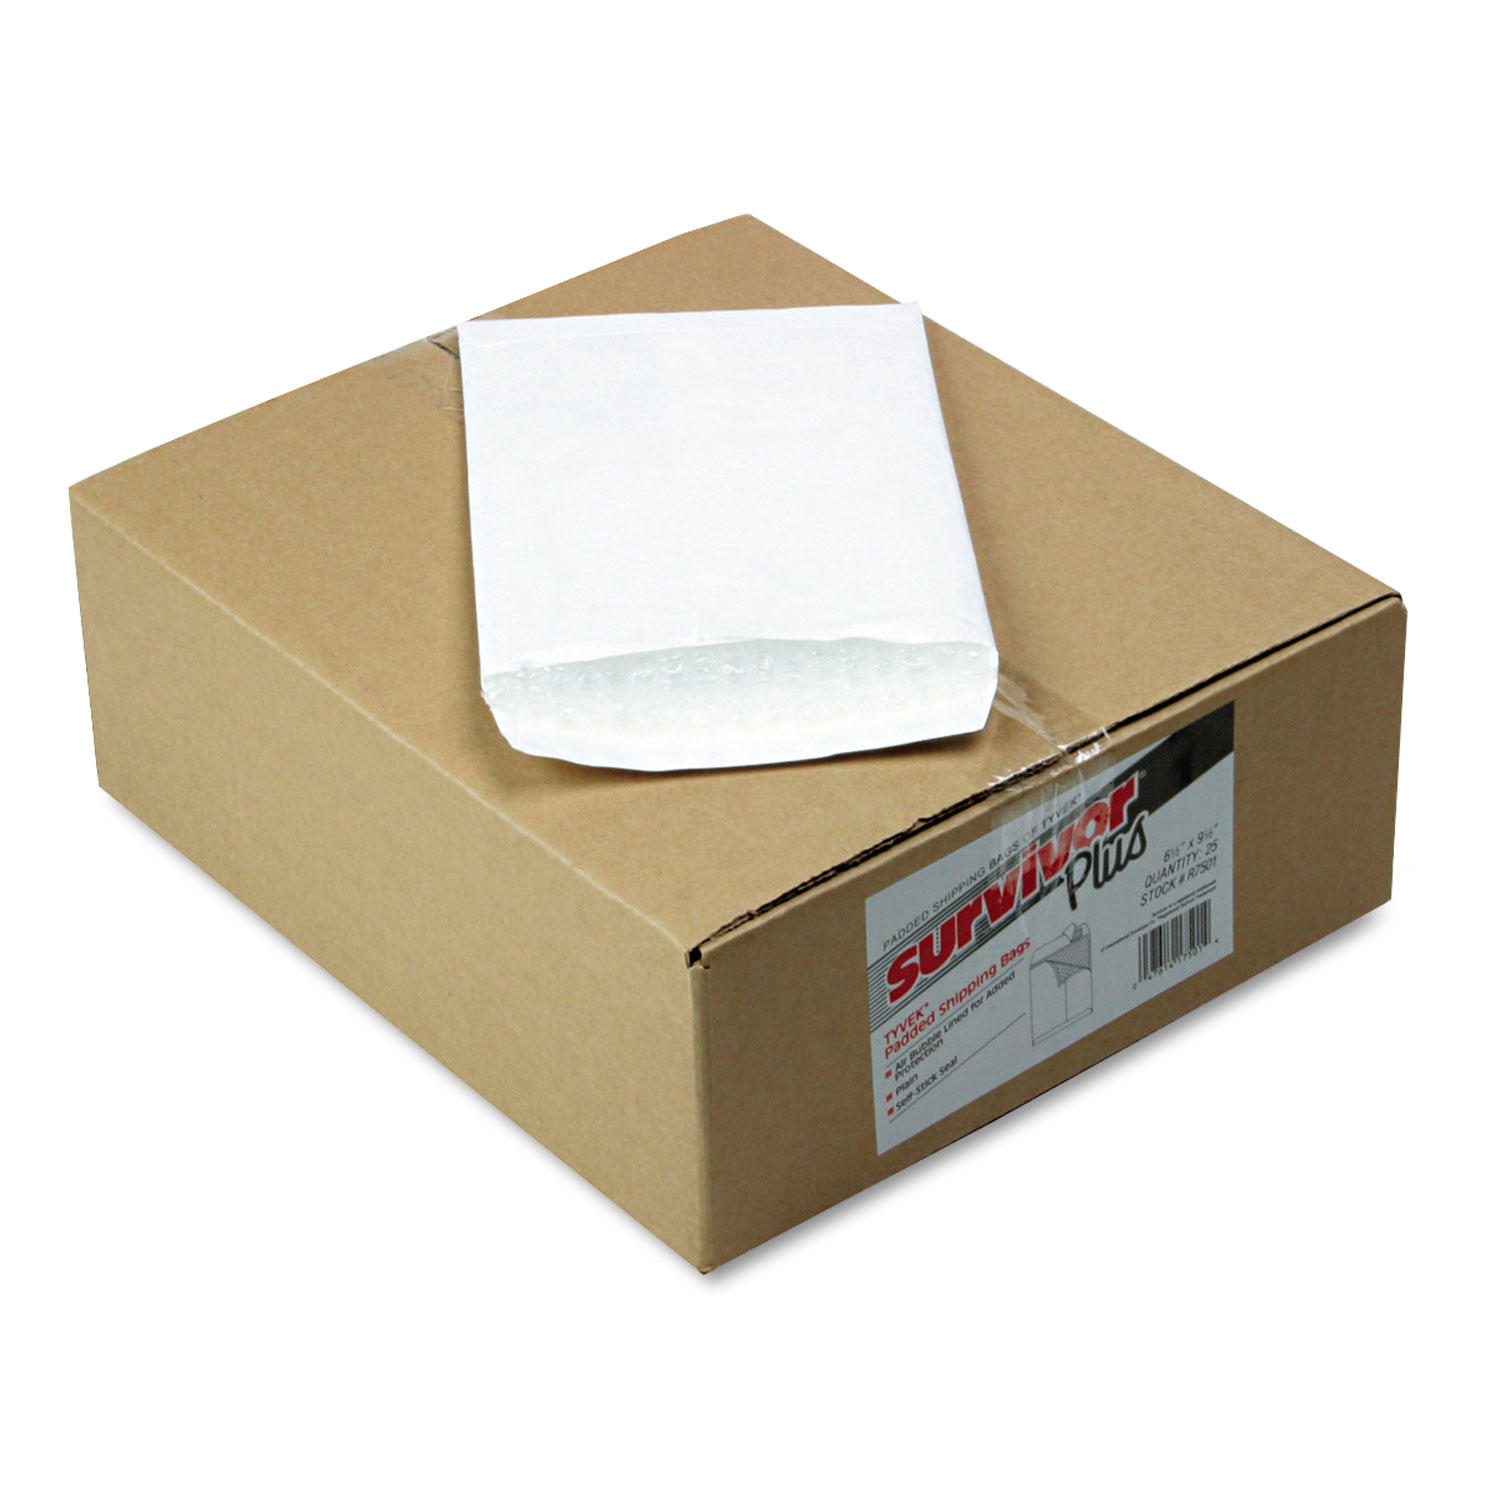  Survivor QUAR7501 Bubble Mailer of DuPont Tyvek, #0, Air Cushion Lining, Self-Adhesive Closure, 6.5 x 9.5, White, 25/Box (QUAR7501) 